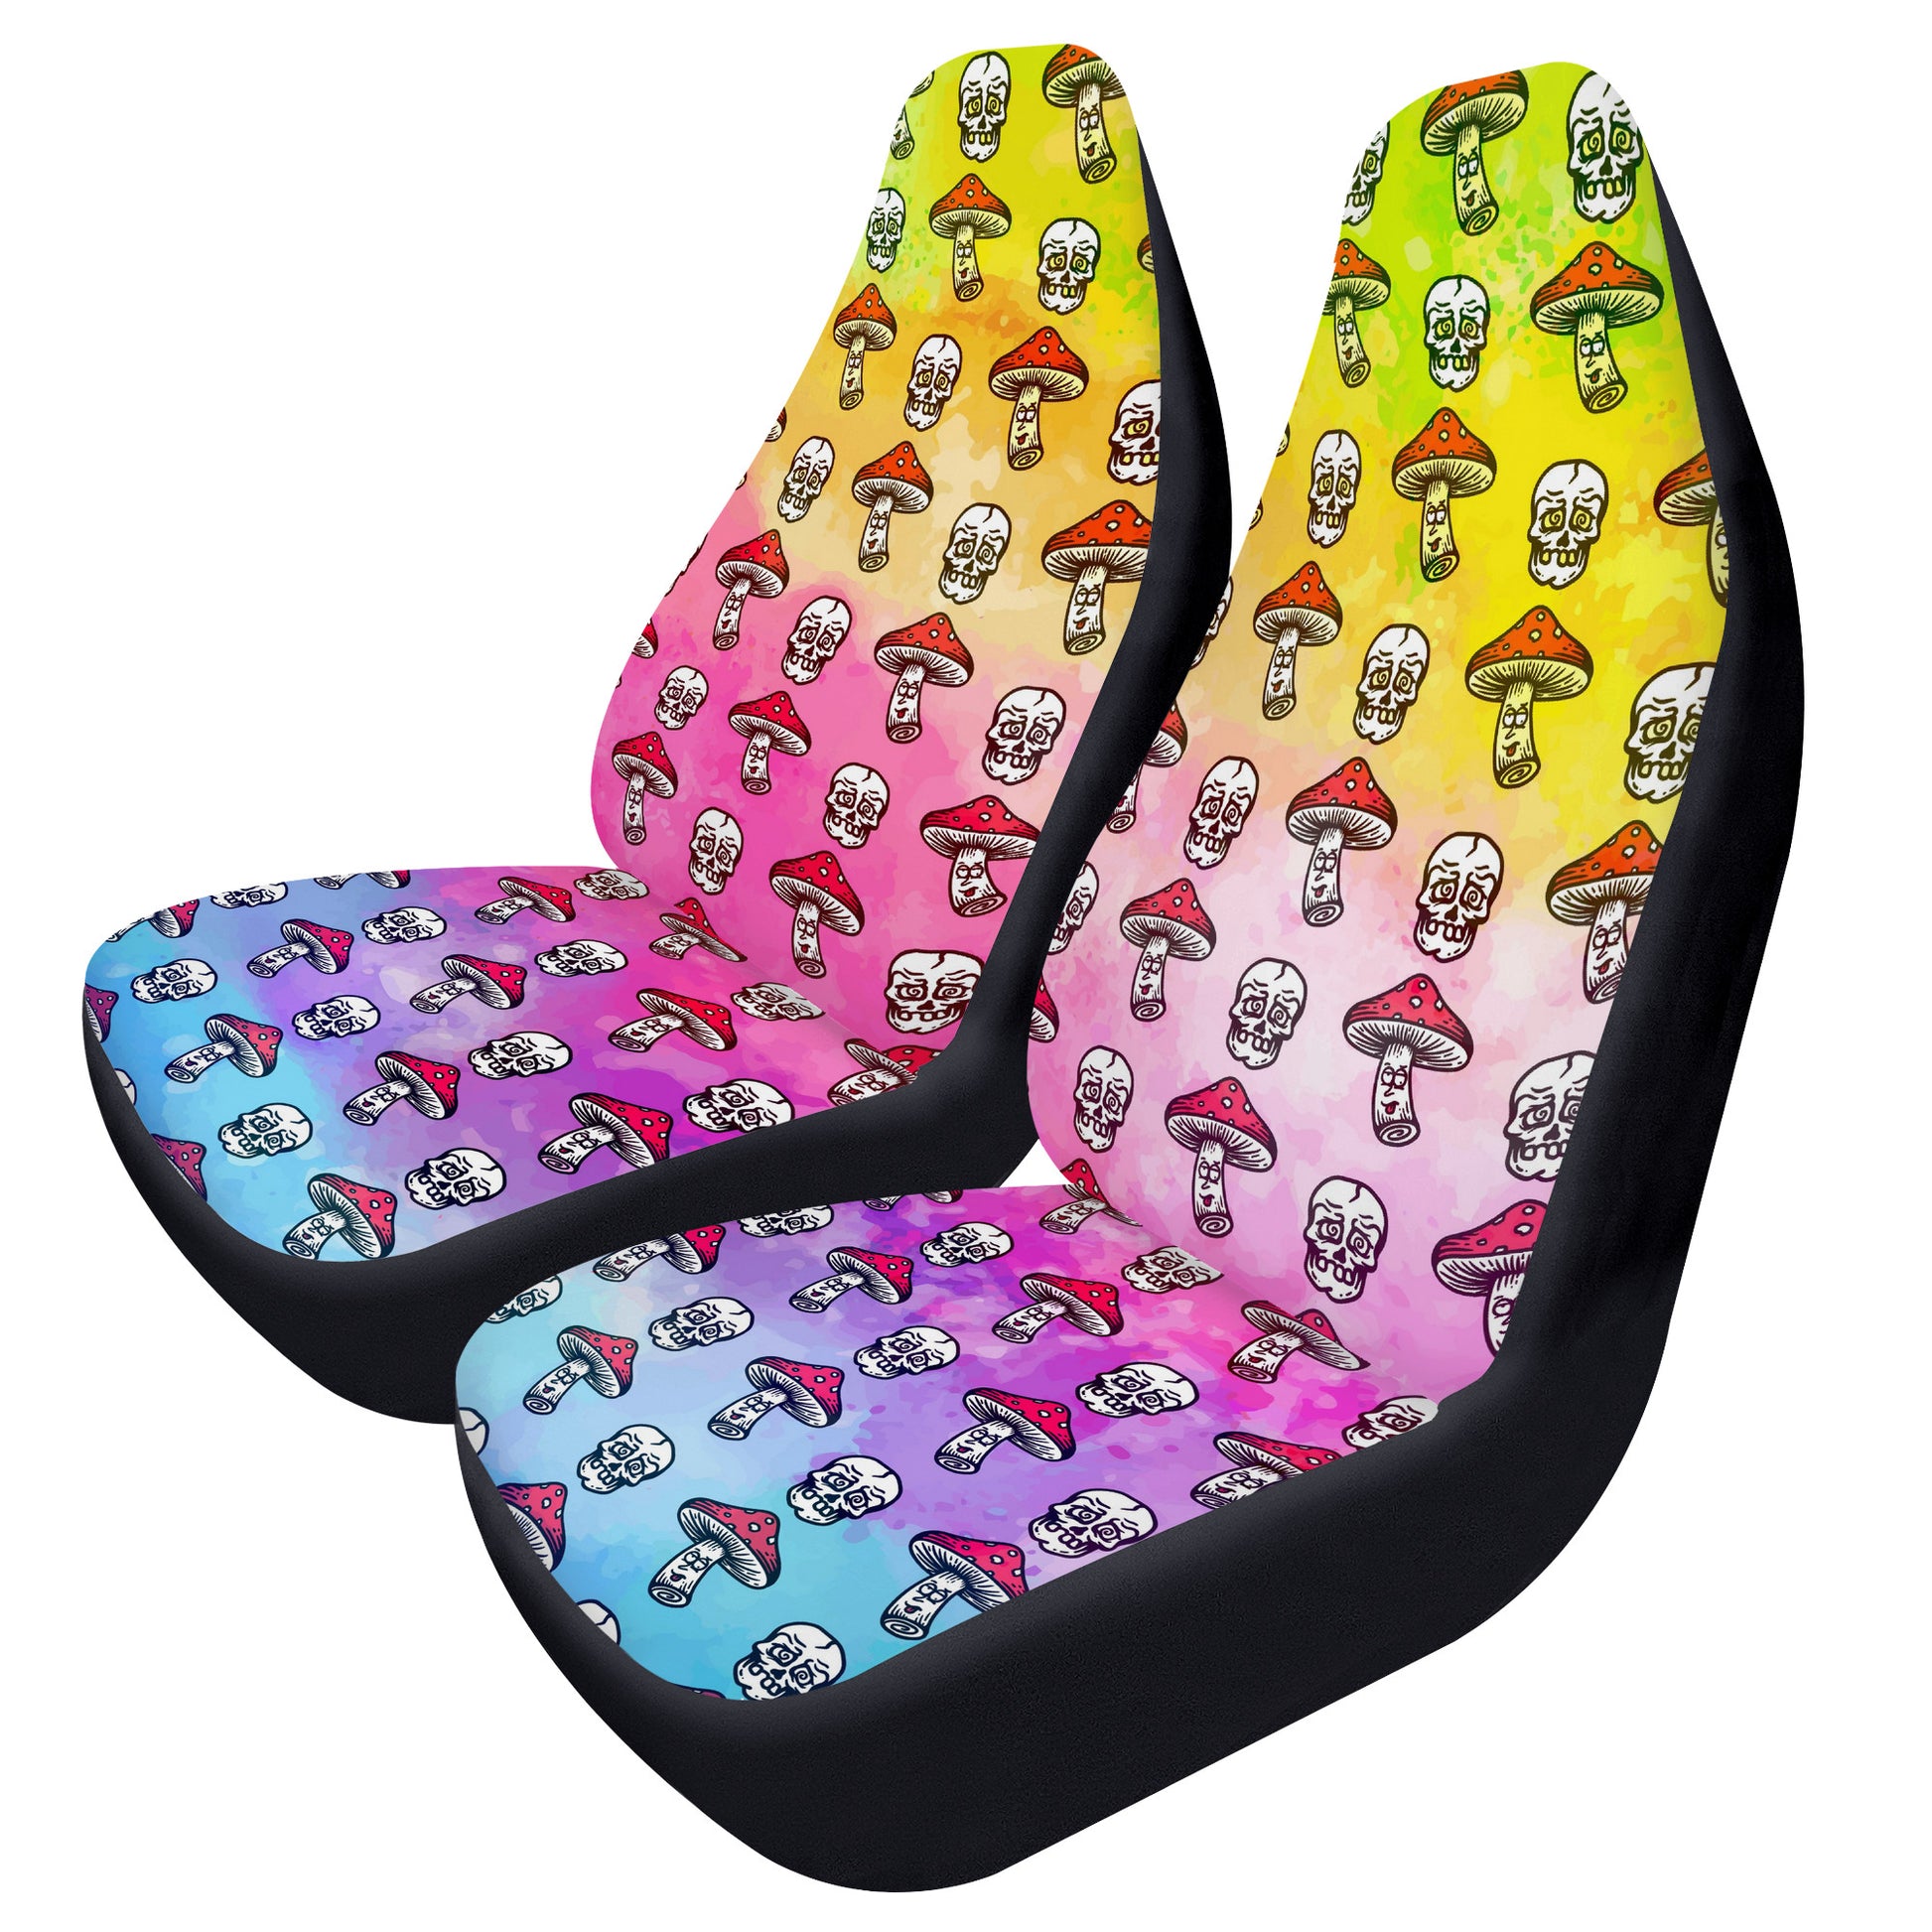 Tie-dye car seat covers